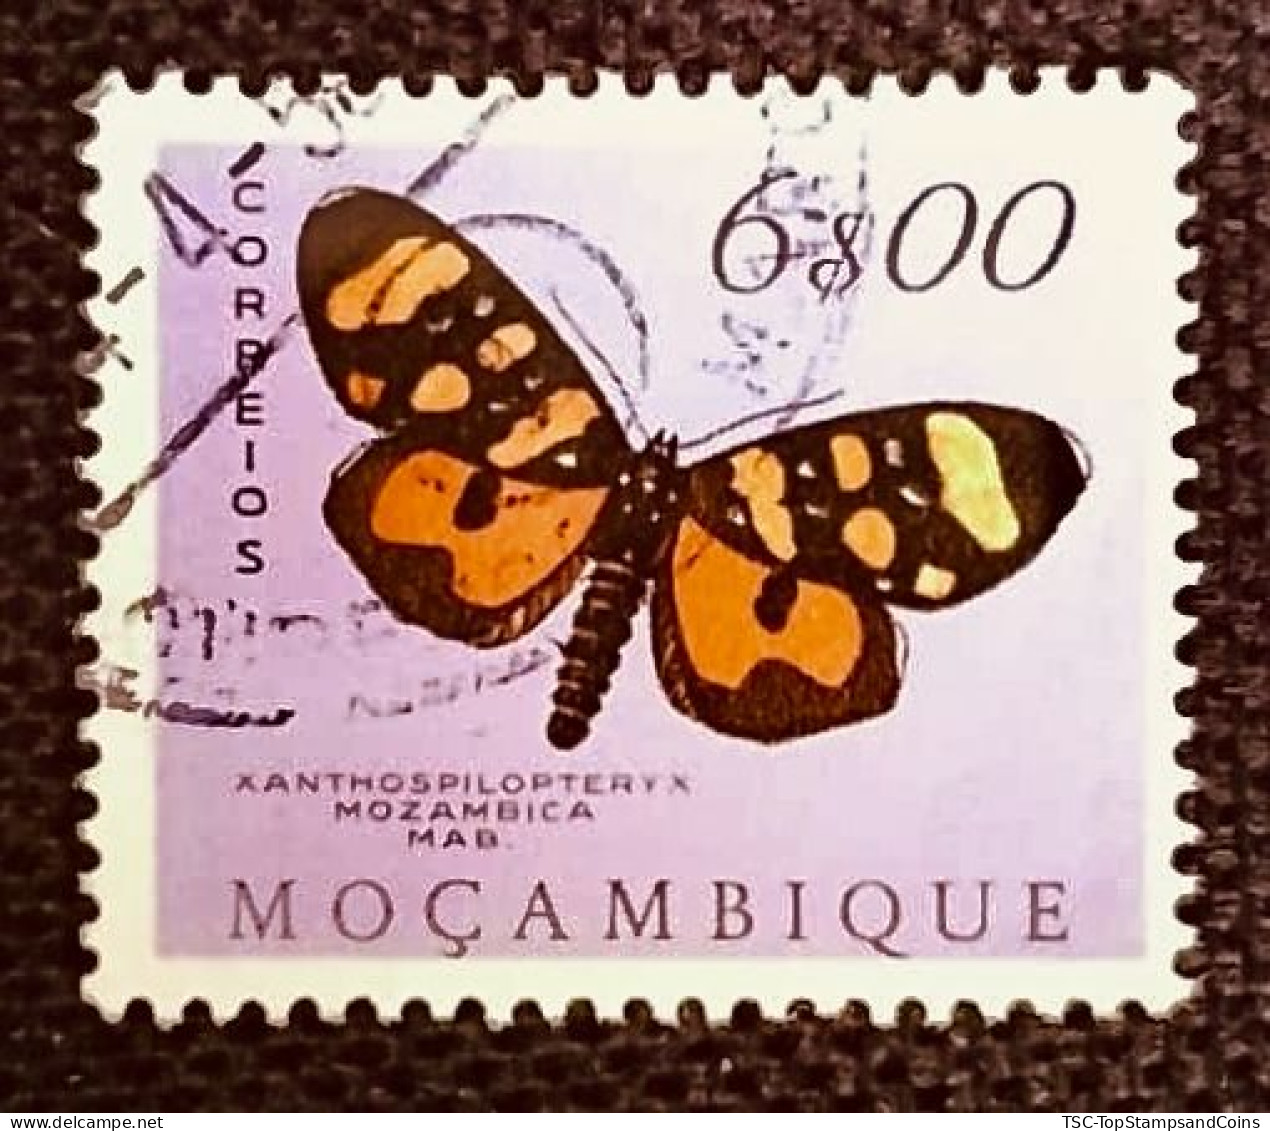 MOZPO0404U5 - Mozambique Butterflies - 6$00 Used Stamp - Mozambique - 1953 - Mosambik